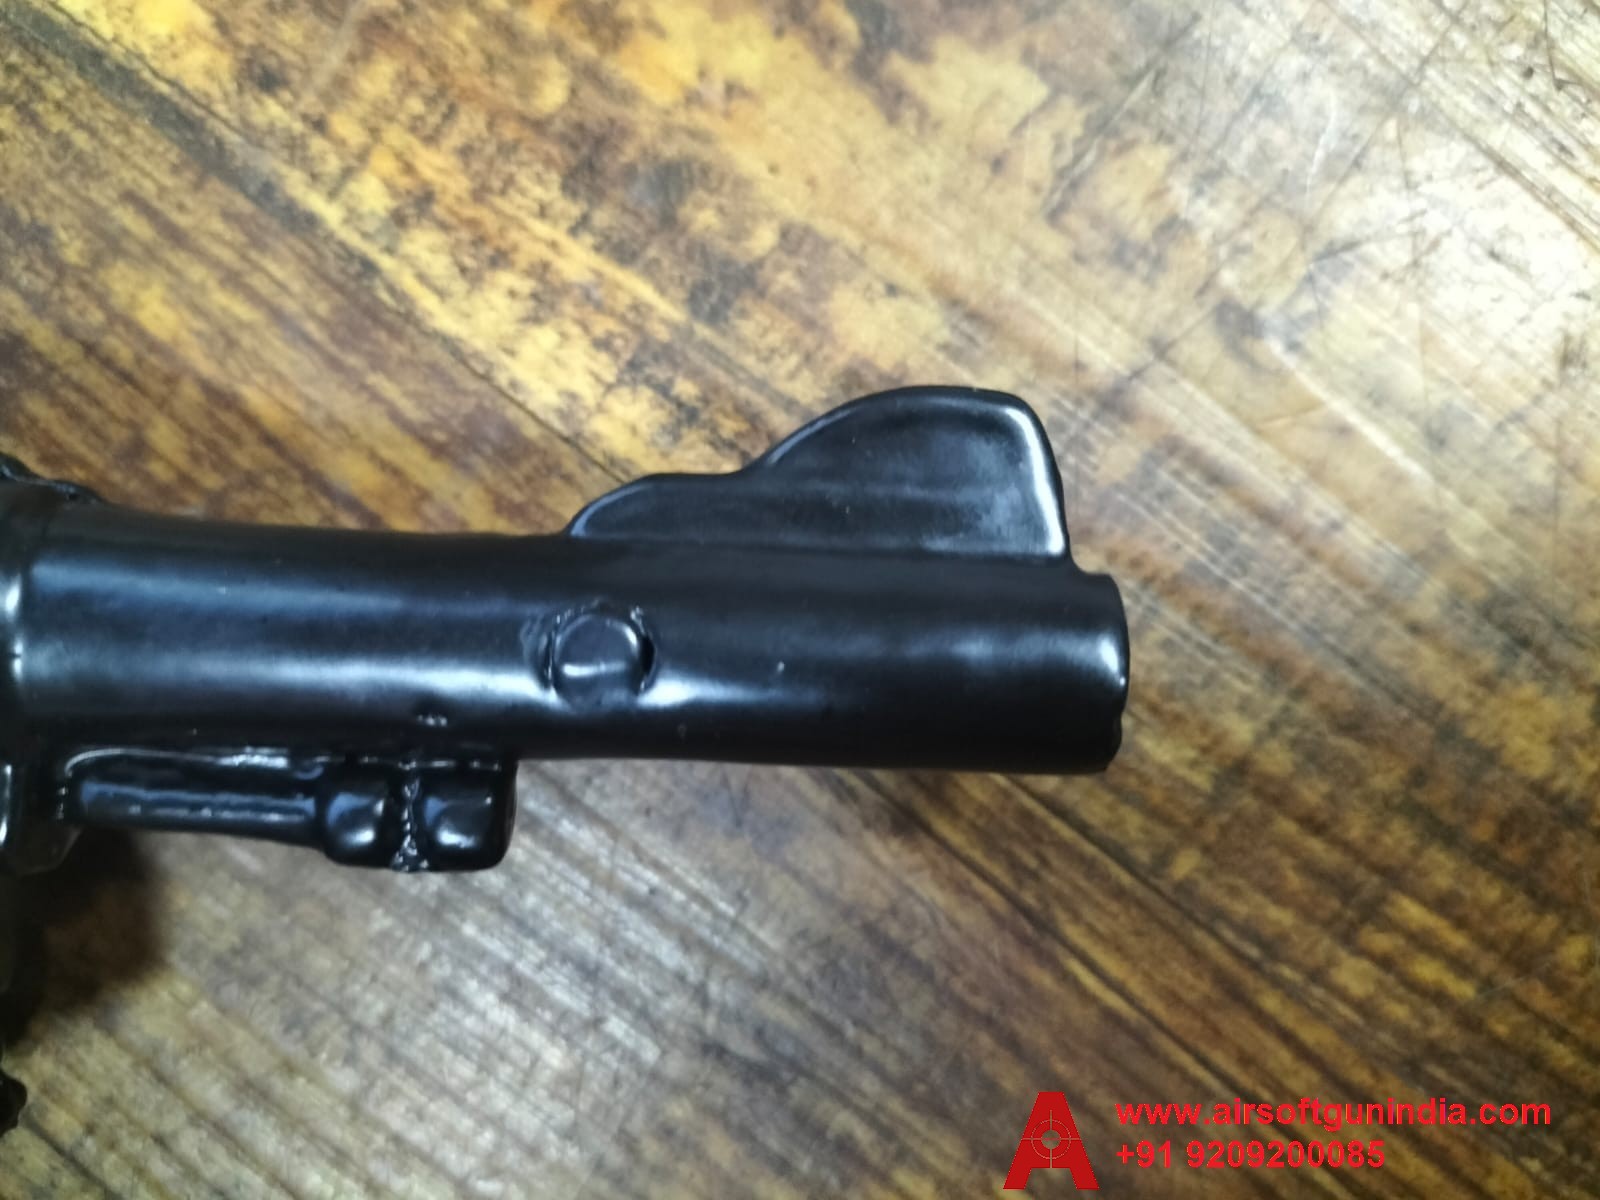 Full Metal Sound Toy Cap Revolver By Airsoft Gun India